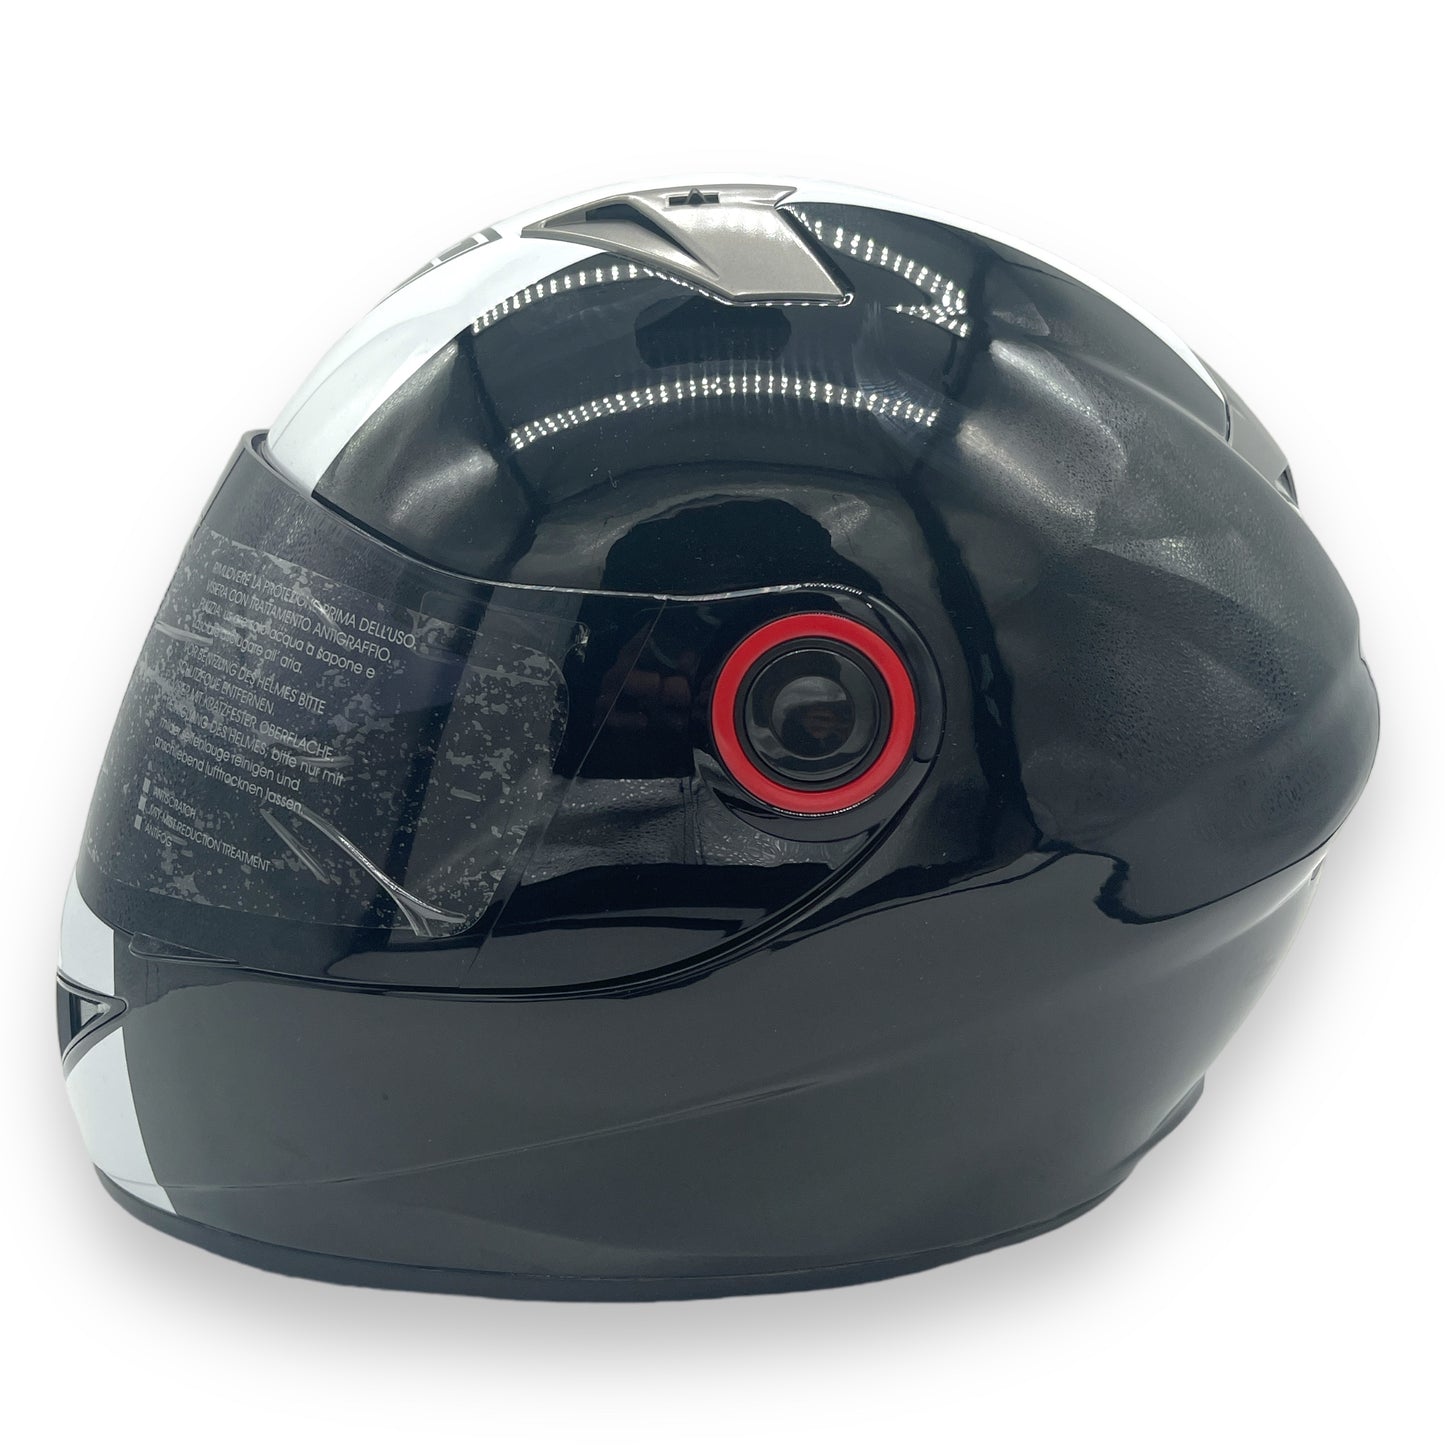 BHR - PM003 - Helmet - S - Black With White